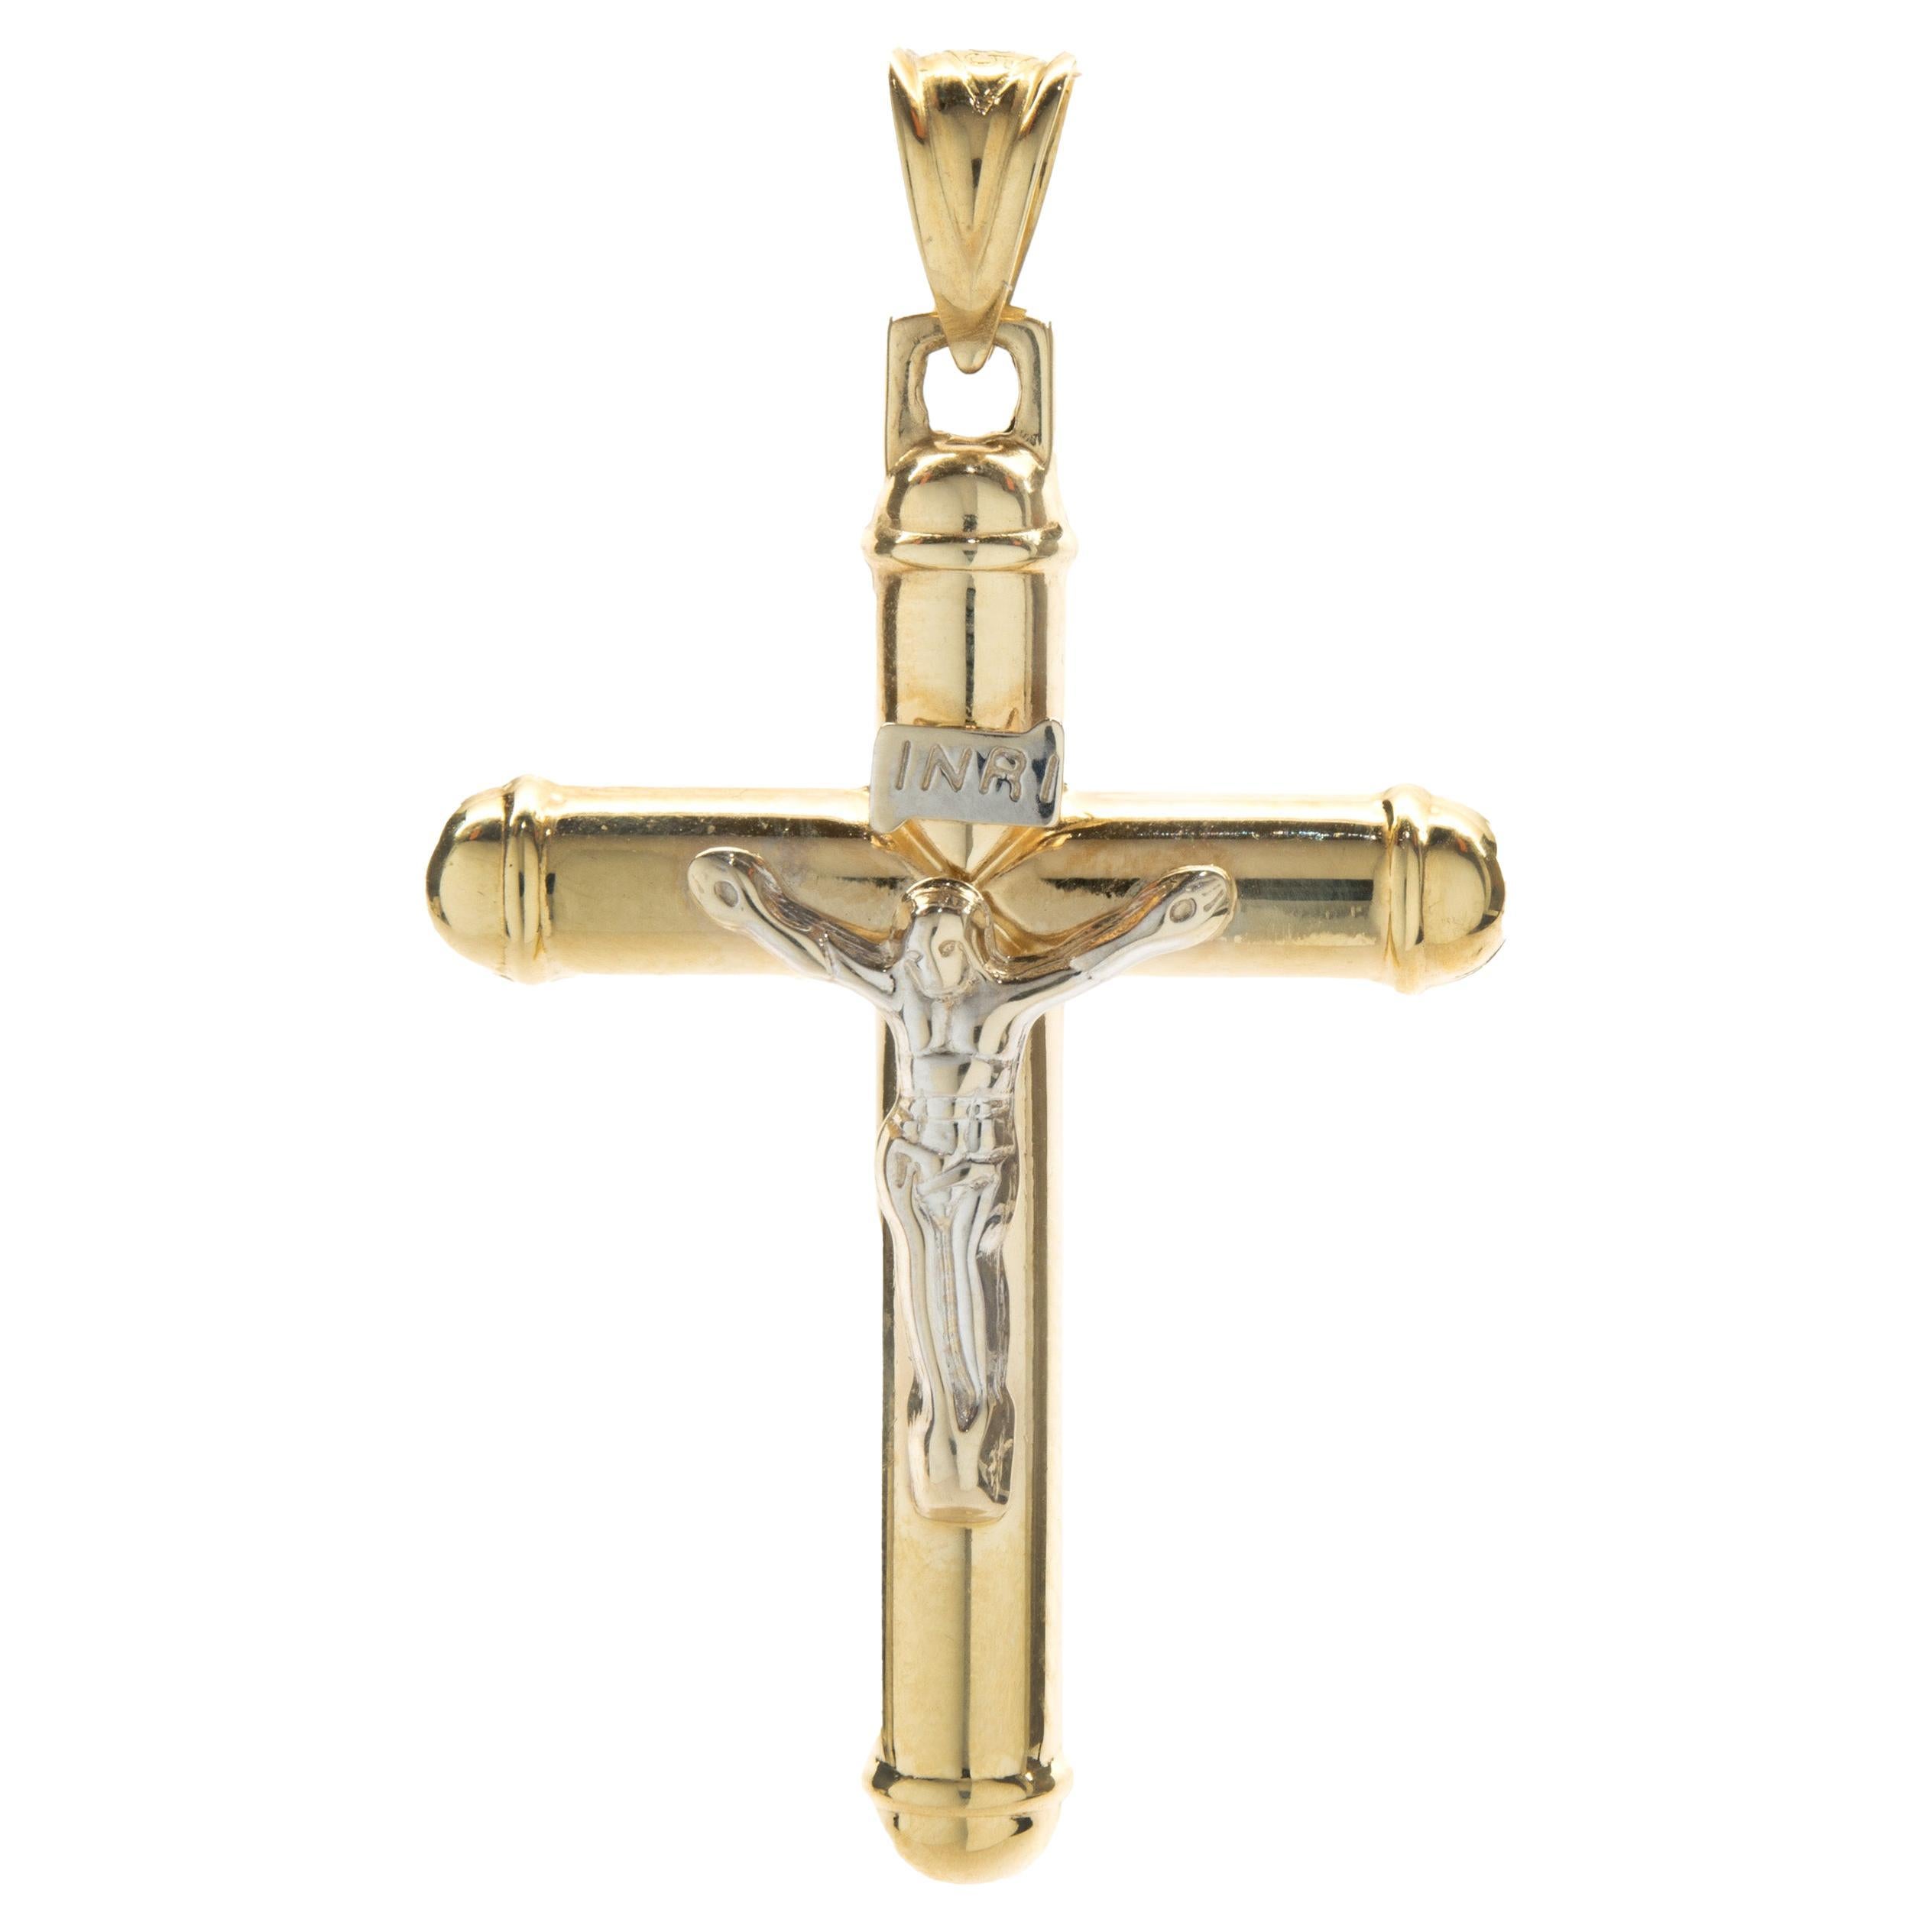 14 Karat Yellow & White Gold Crucifix Cross Pendant